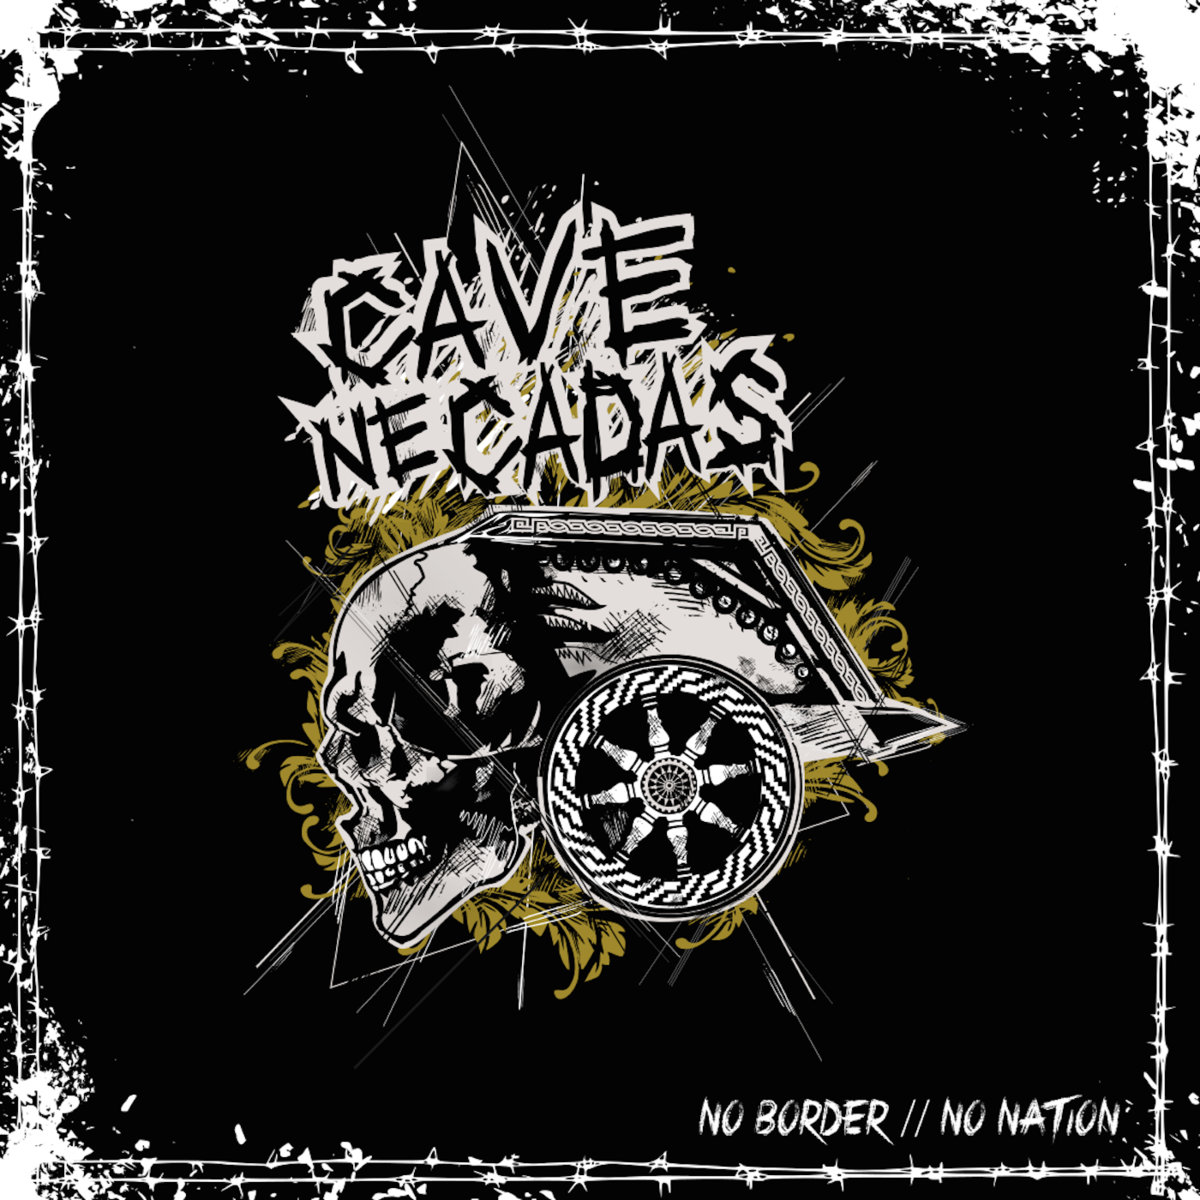 CAVE NE CADAS "No border / No nation" - LP